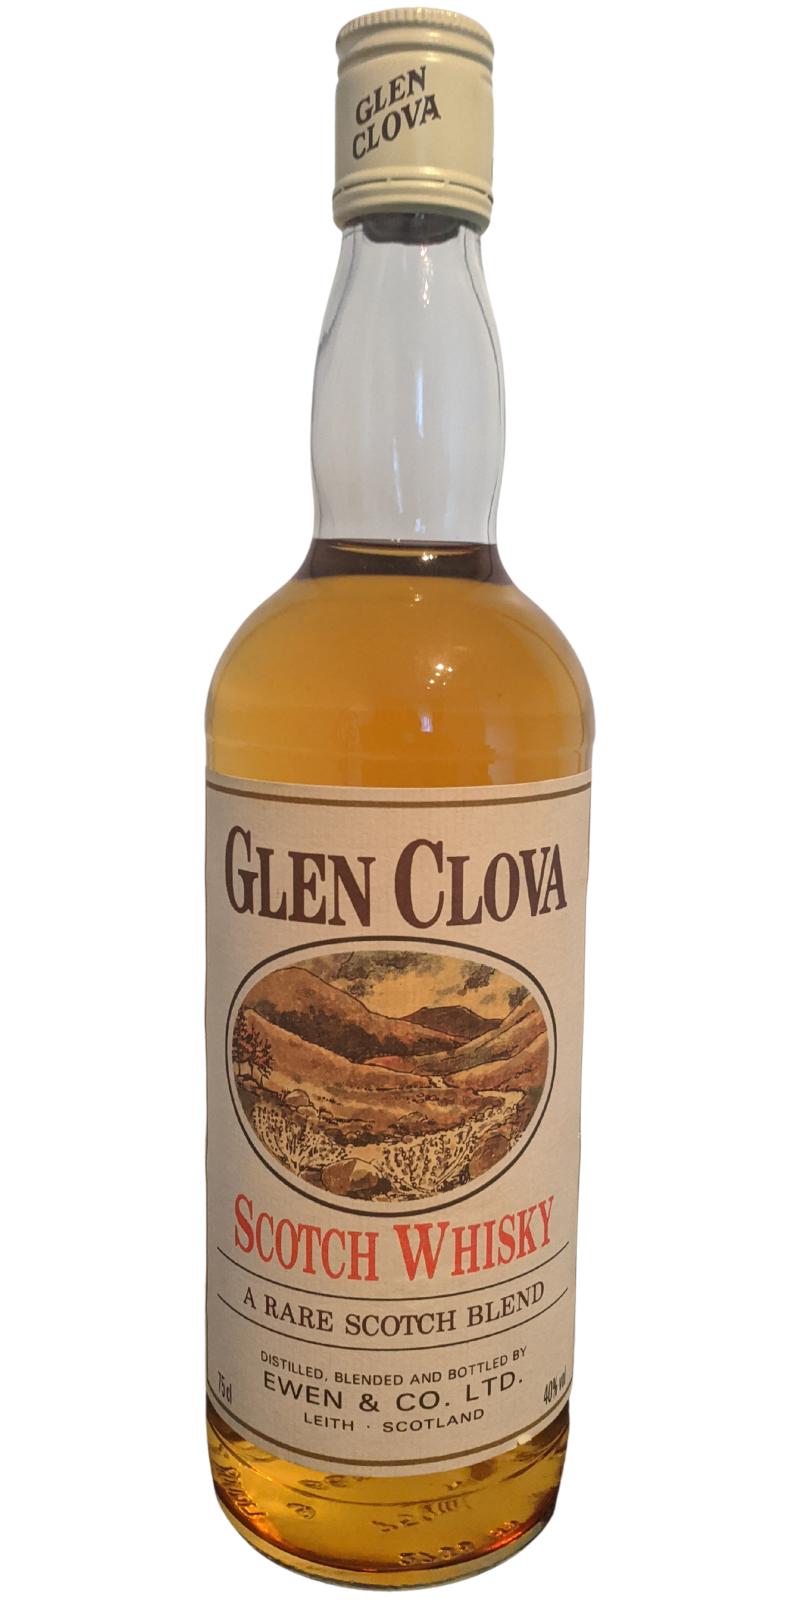 Glen Clova Scotch Whisky EwCL A Rare Scotch Blend 40% 750ml